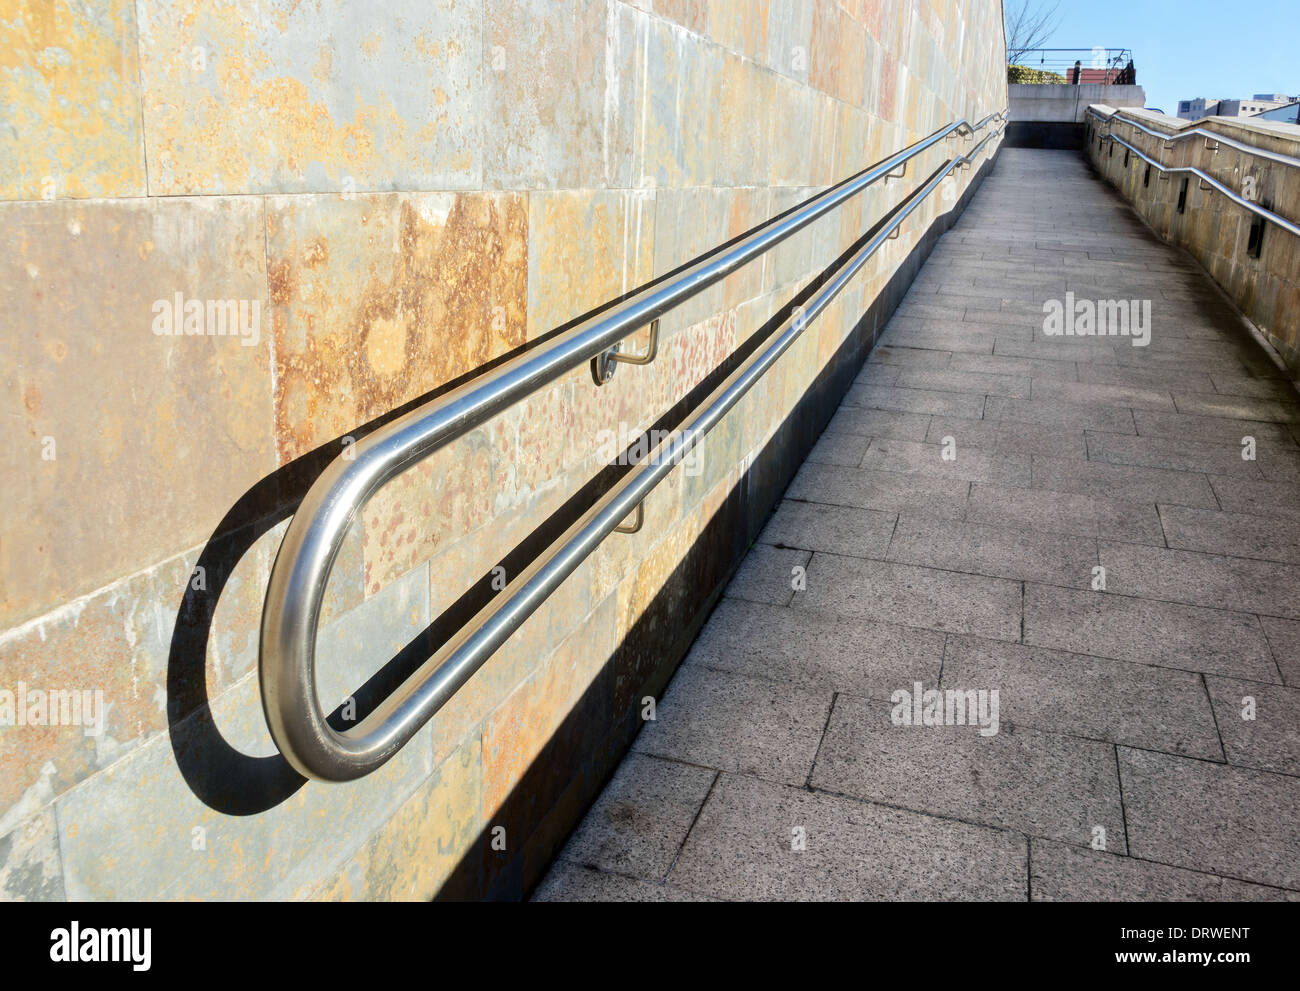 metal railings on a slope of pedestrian walkway Stock Photo